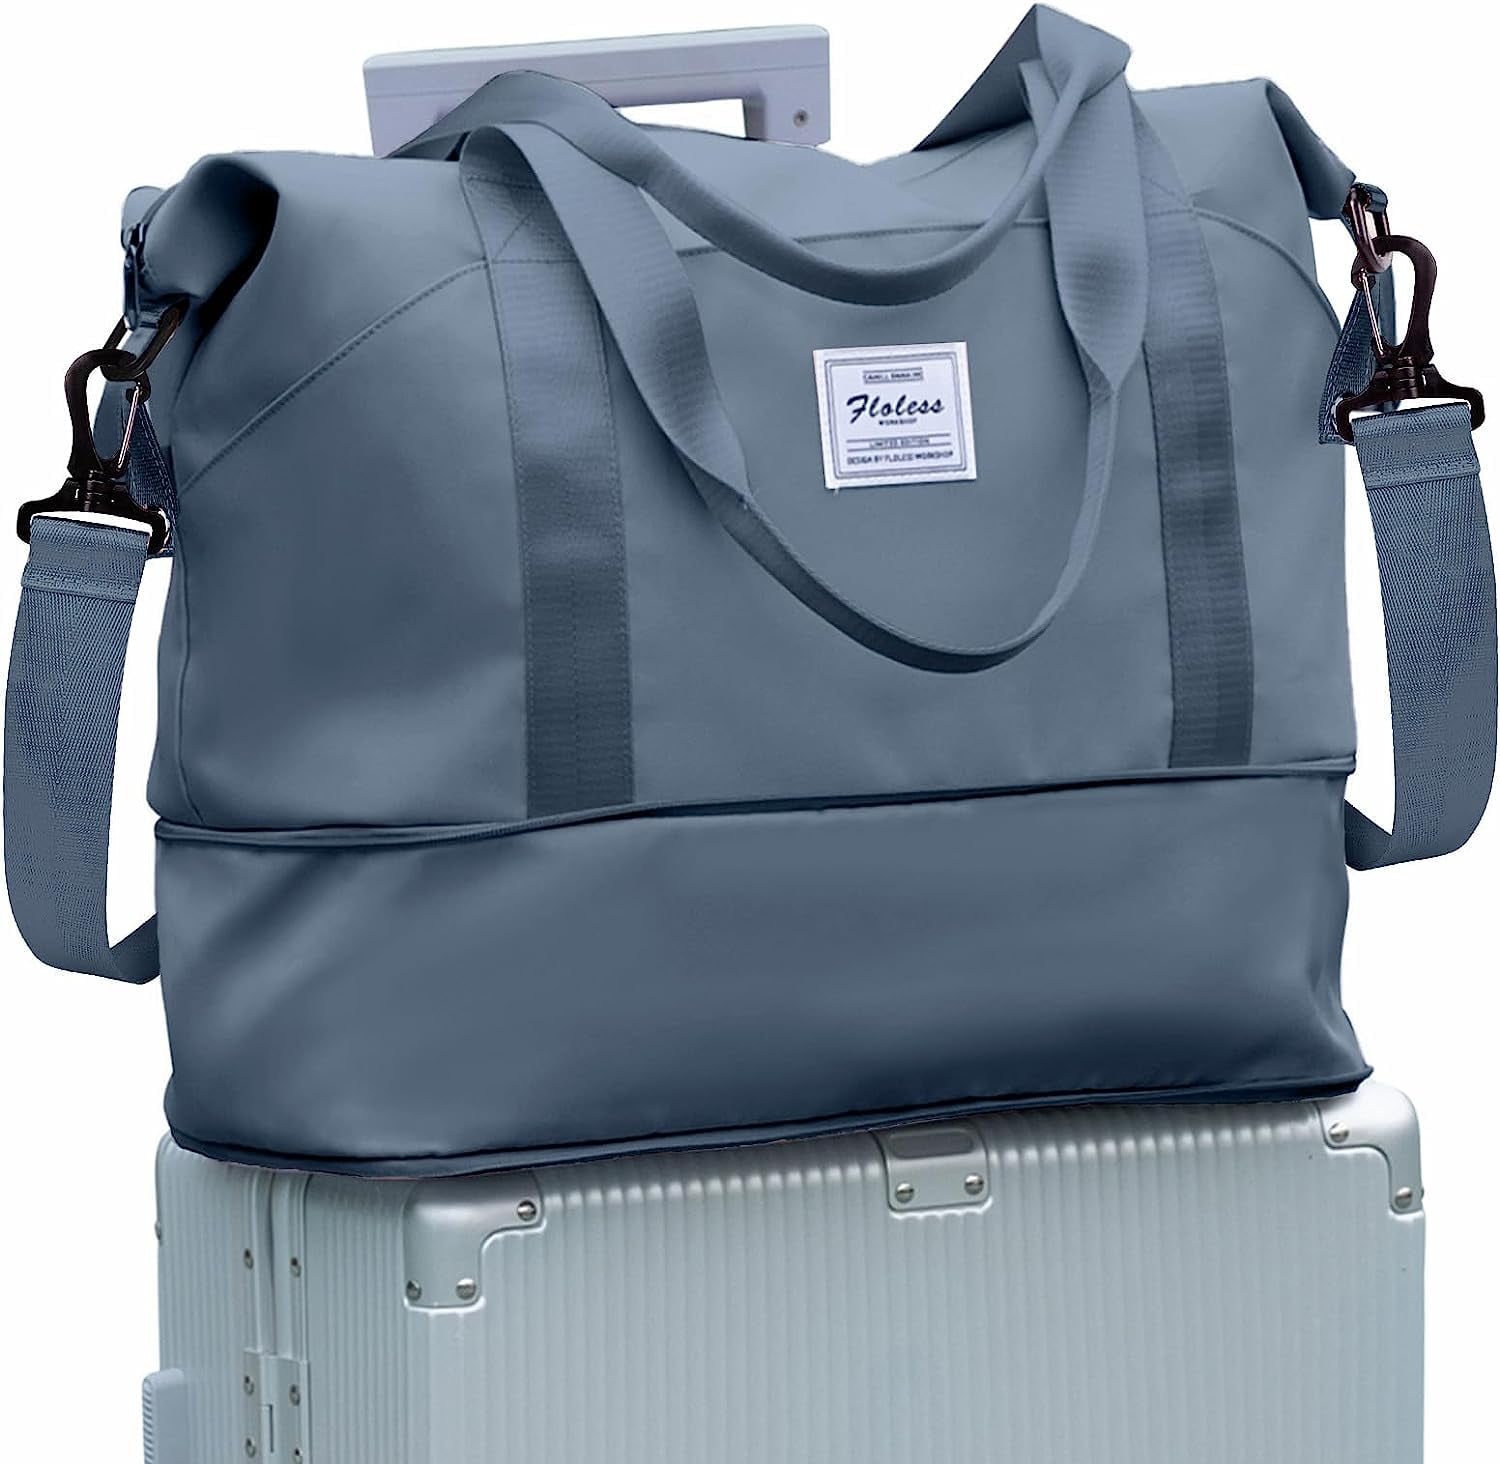 Carry-On Bag With Trolley Sleeve | forum.iktva.sa